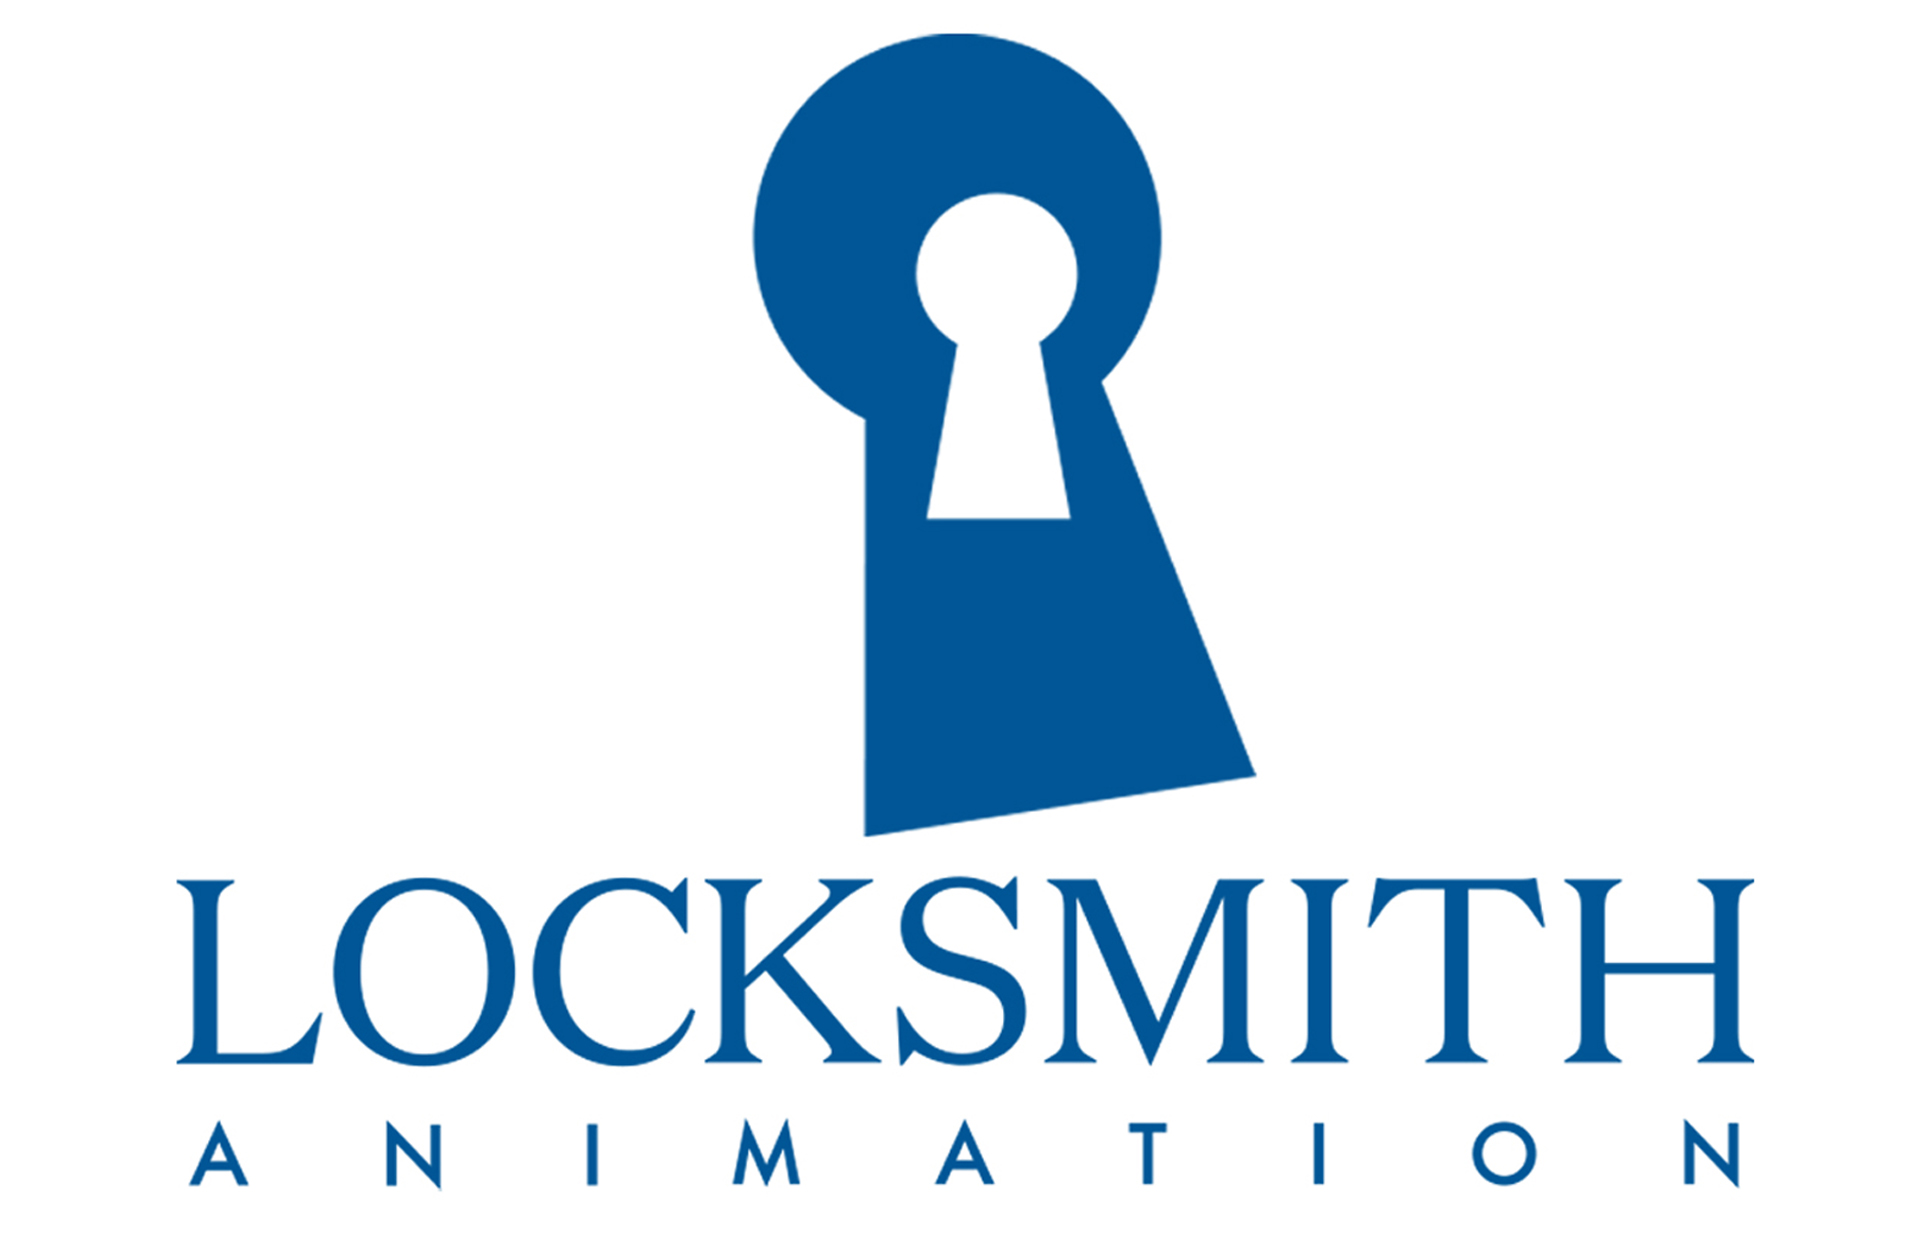 LOCKSMITH ANIMATION'S FEATURE FILM 'THAT CHRISTMAS' TO BE SIMON